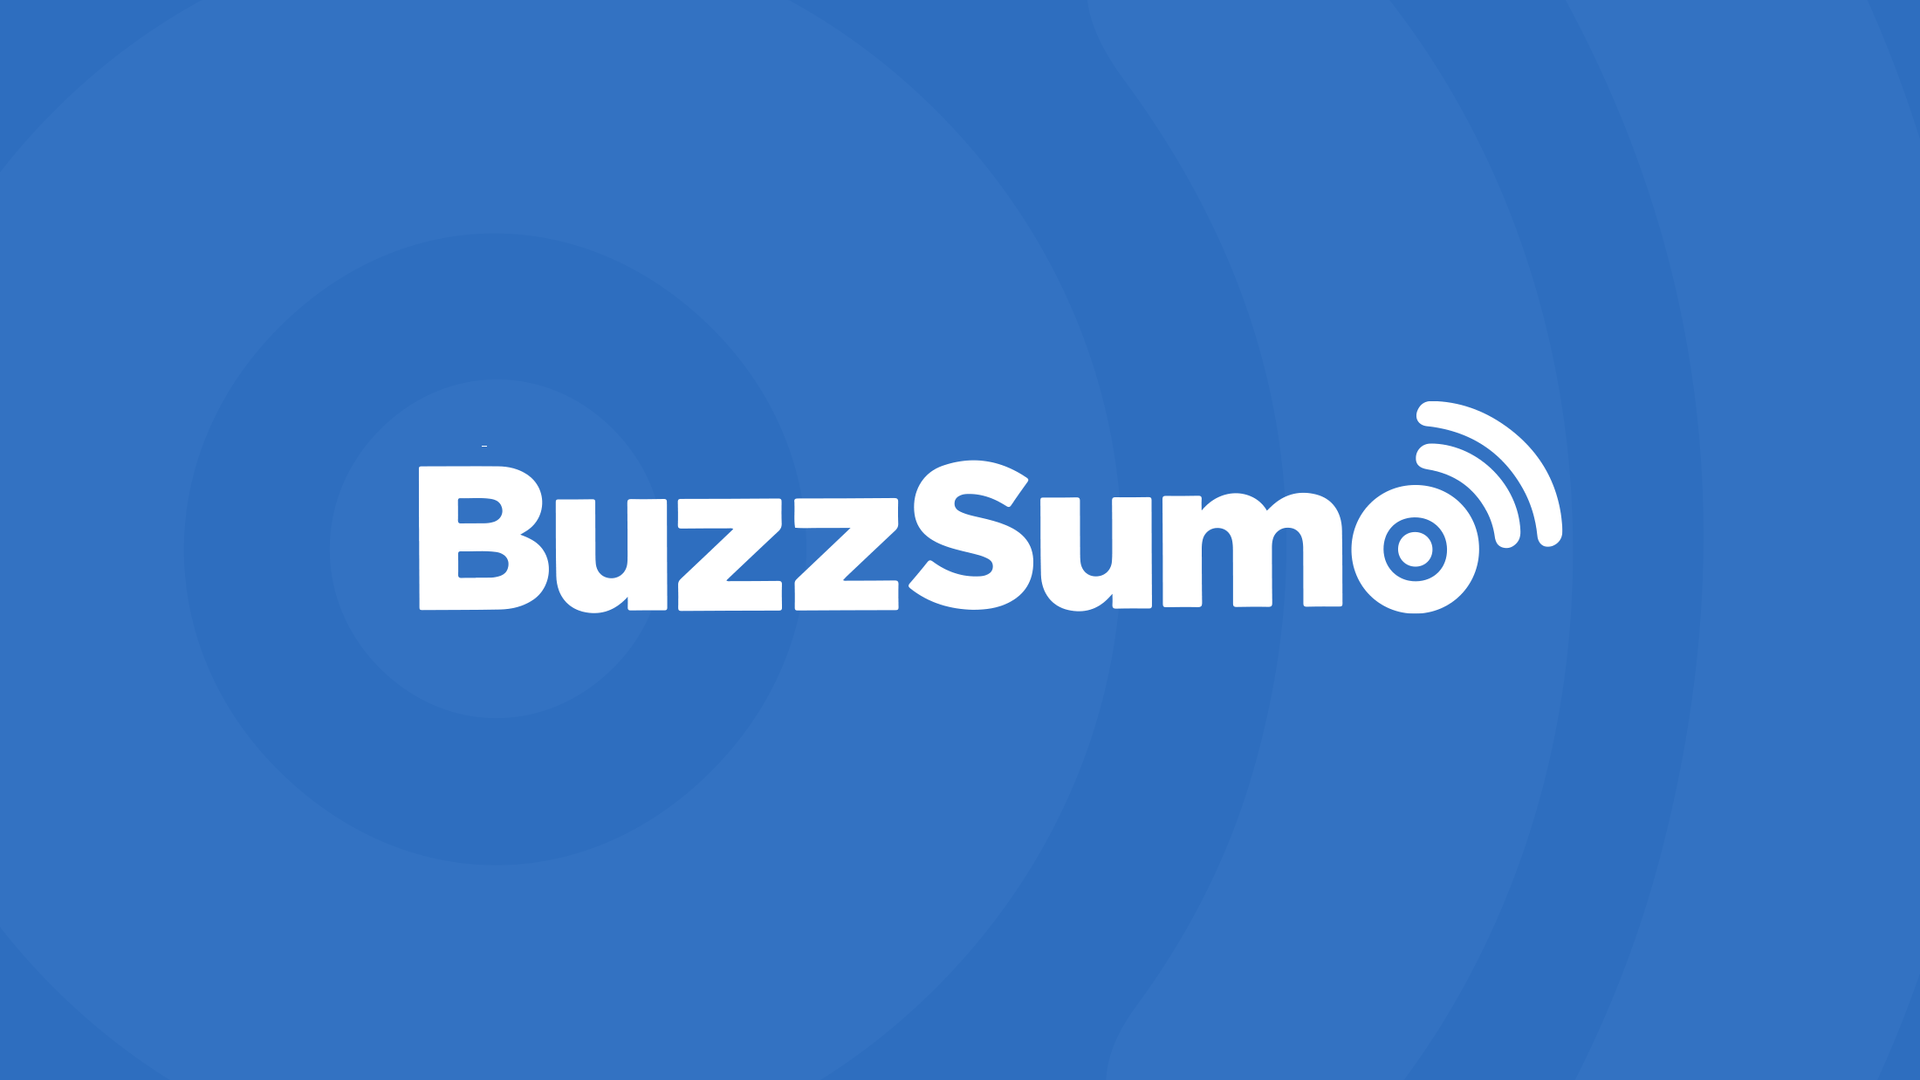 Buzzsumo images